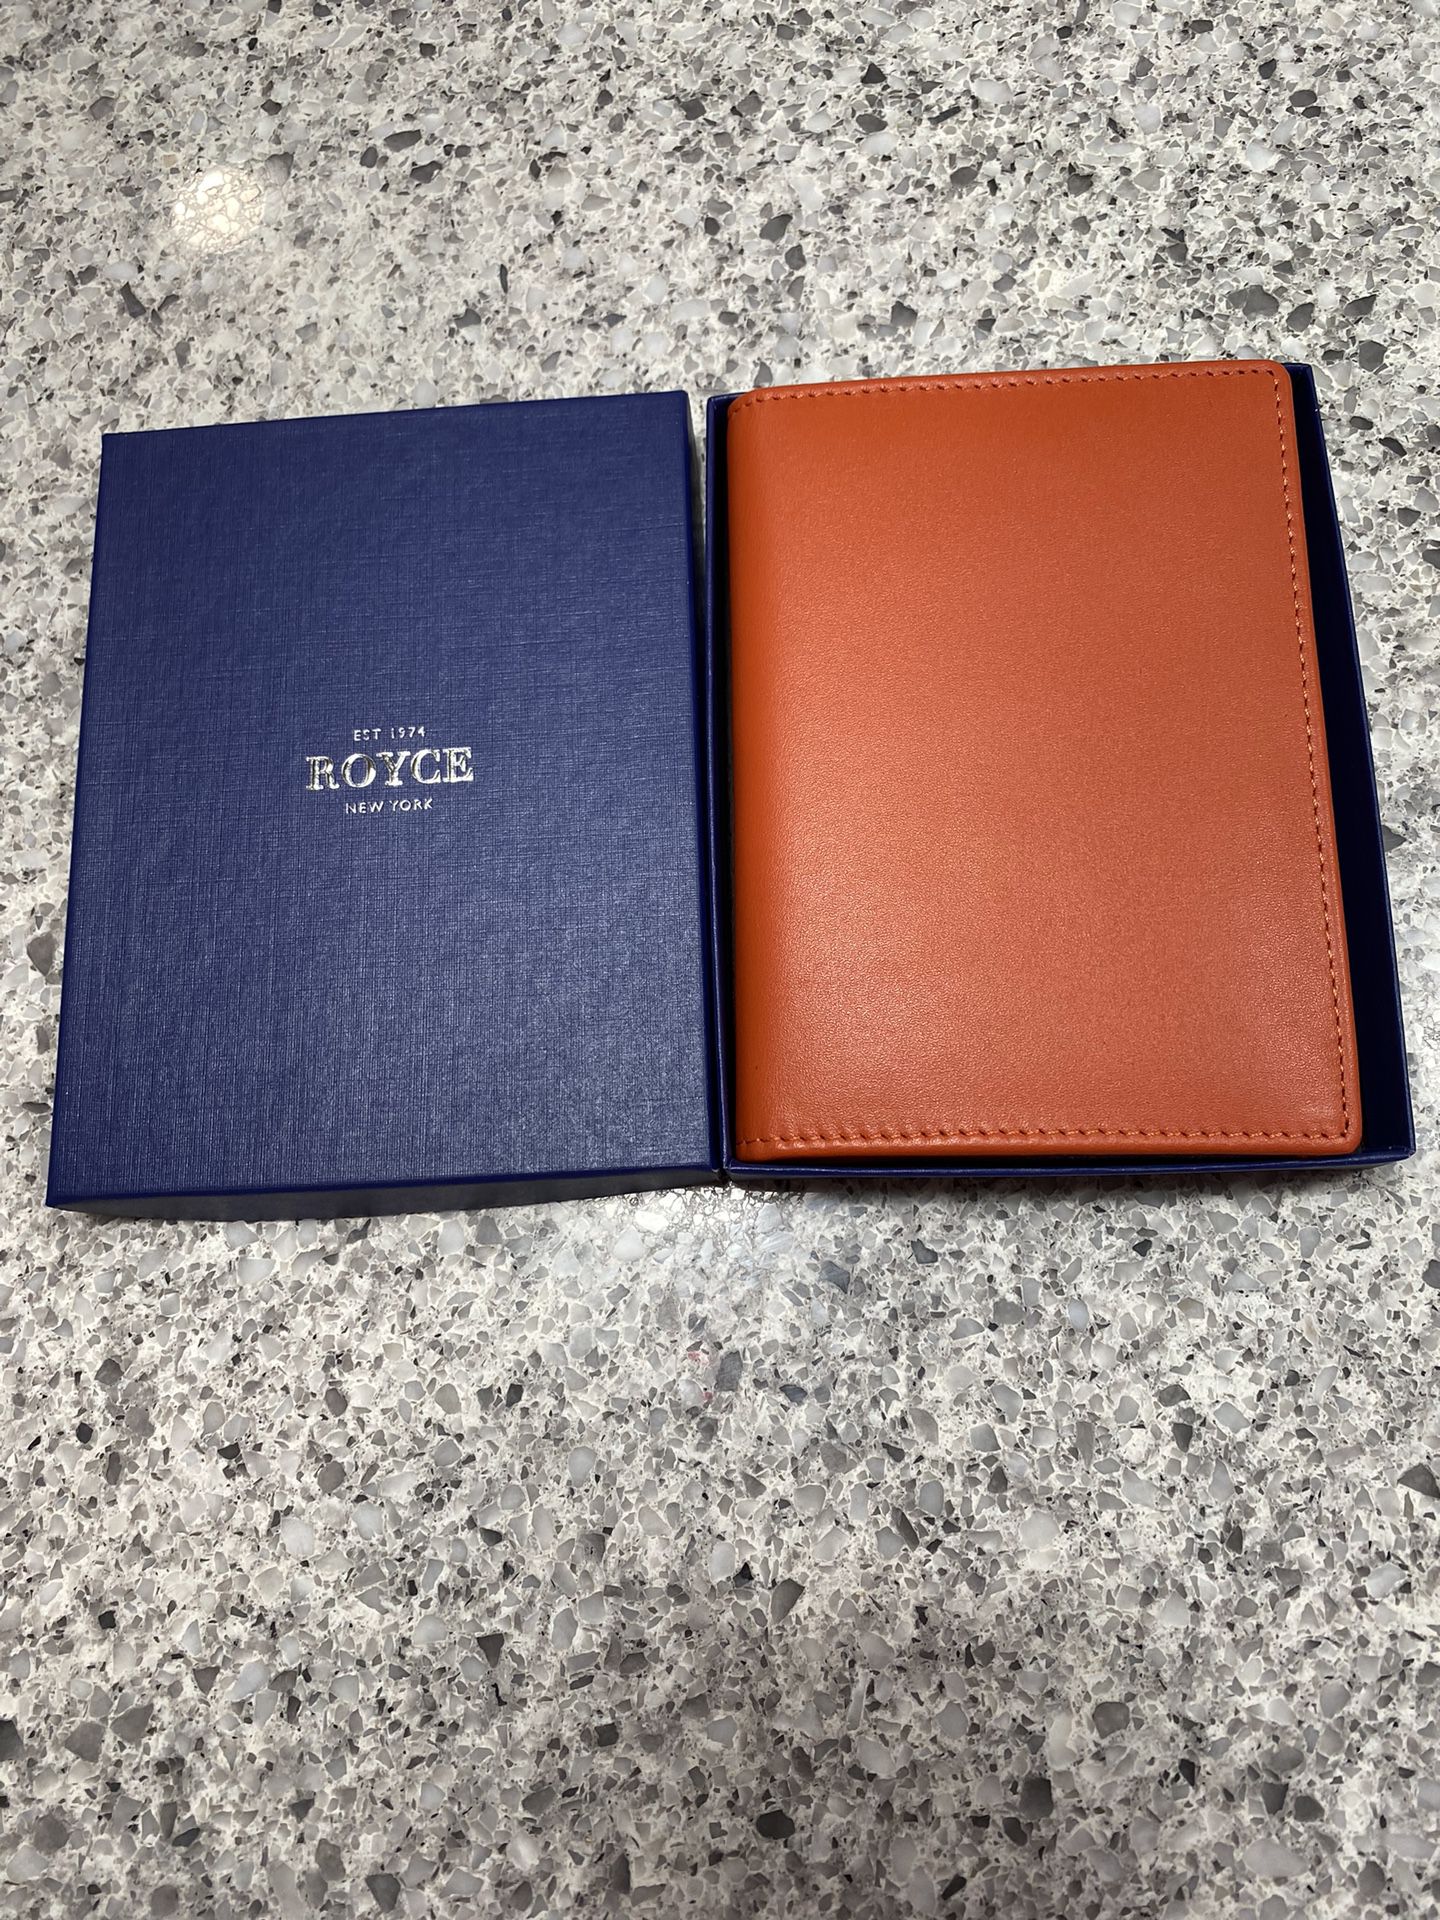 Royce passport And Travel Document Holder- New